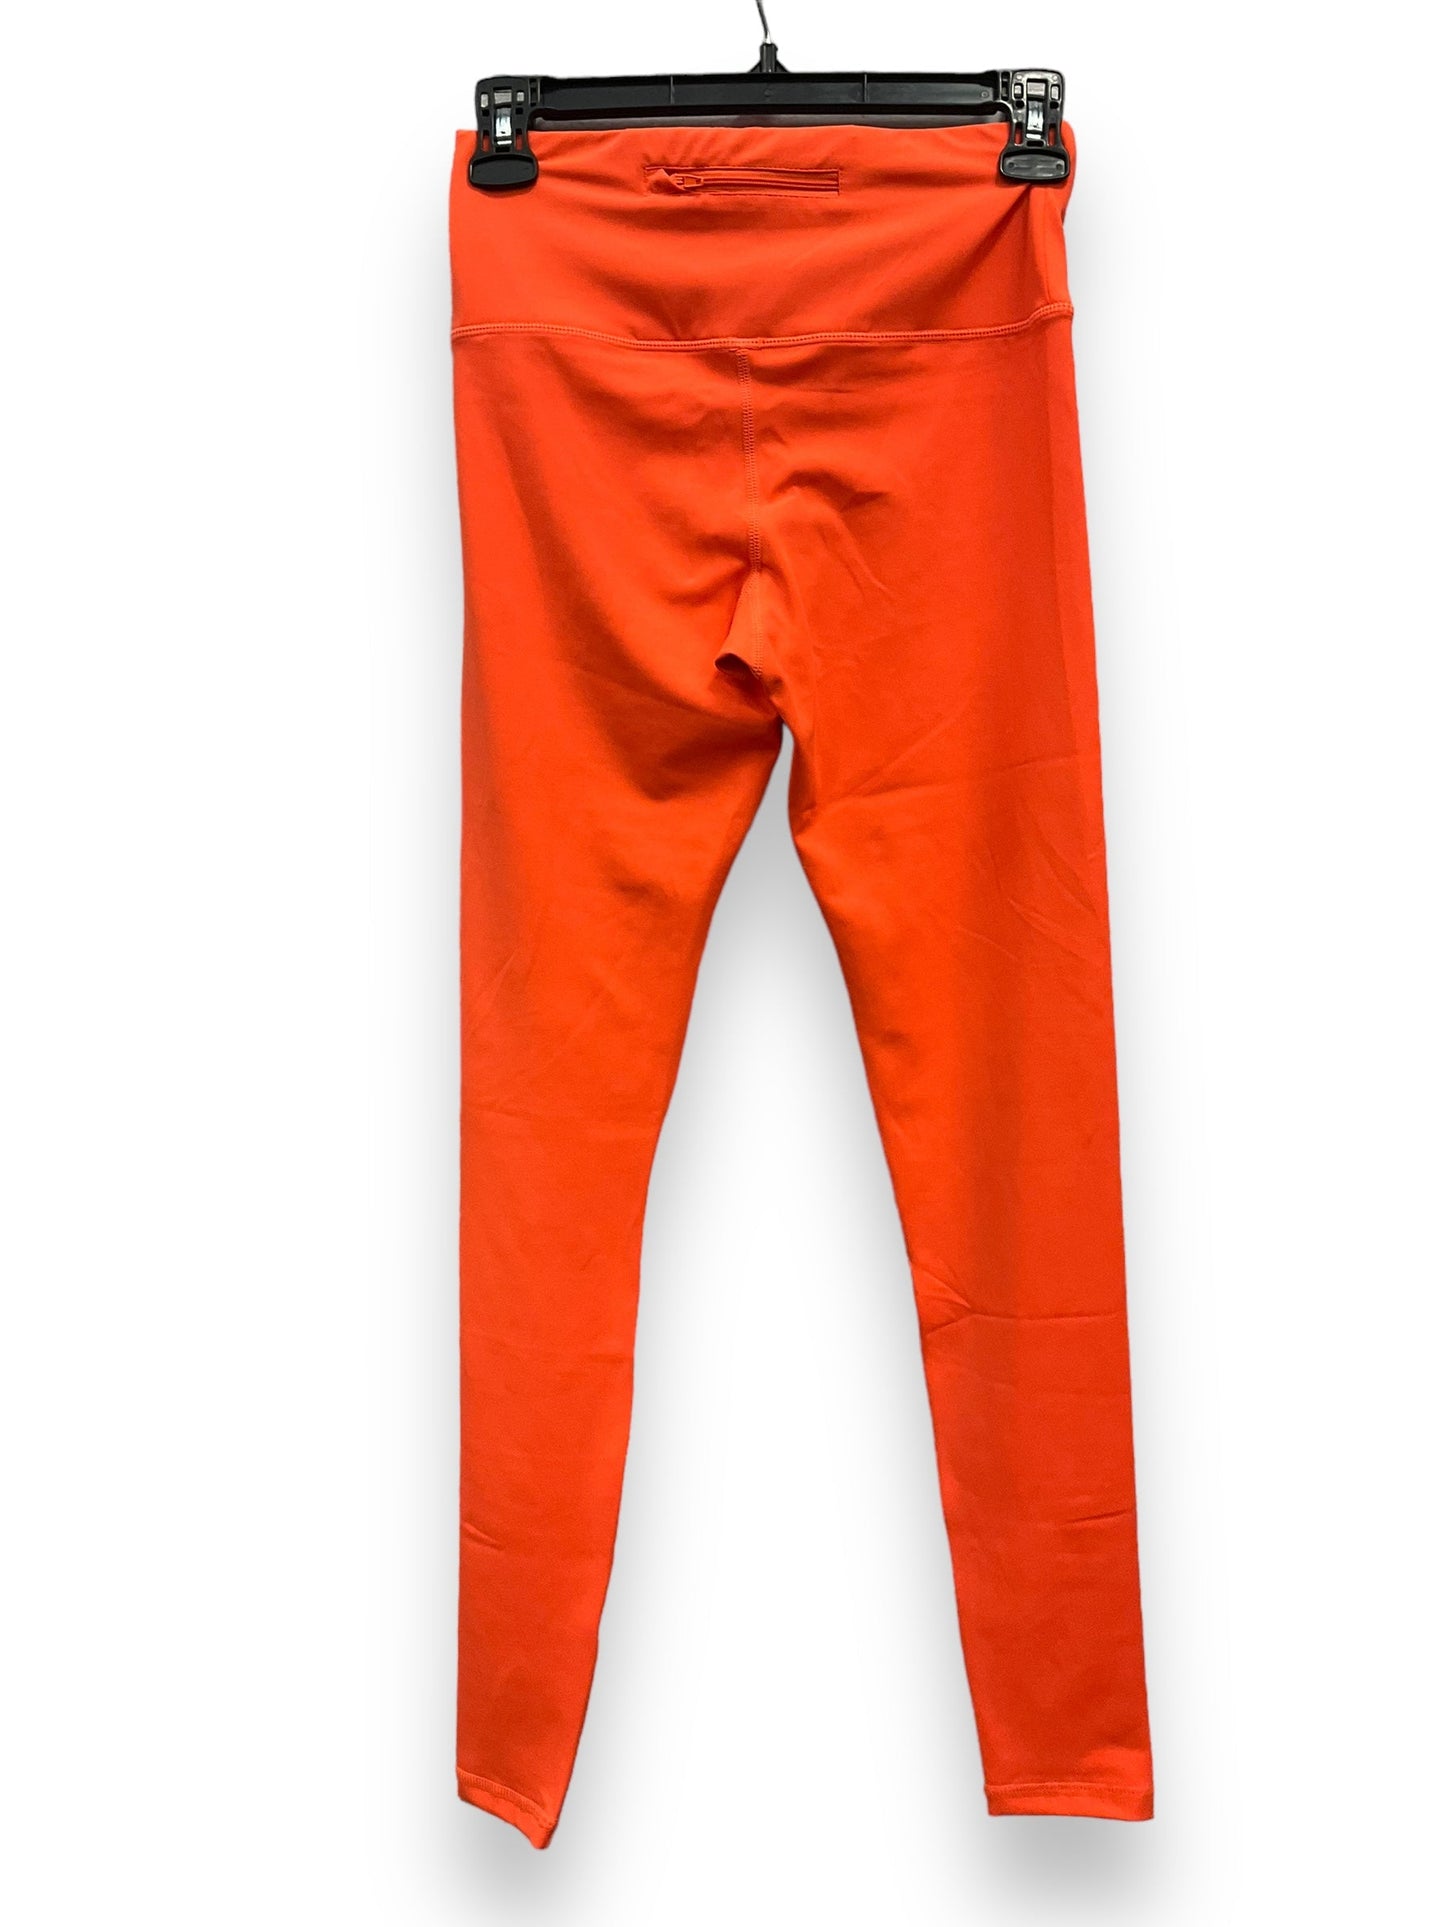 Orange Athletic Leggings Clothes Mentor, Size S